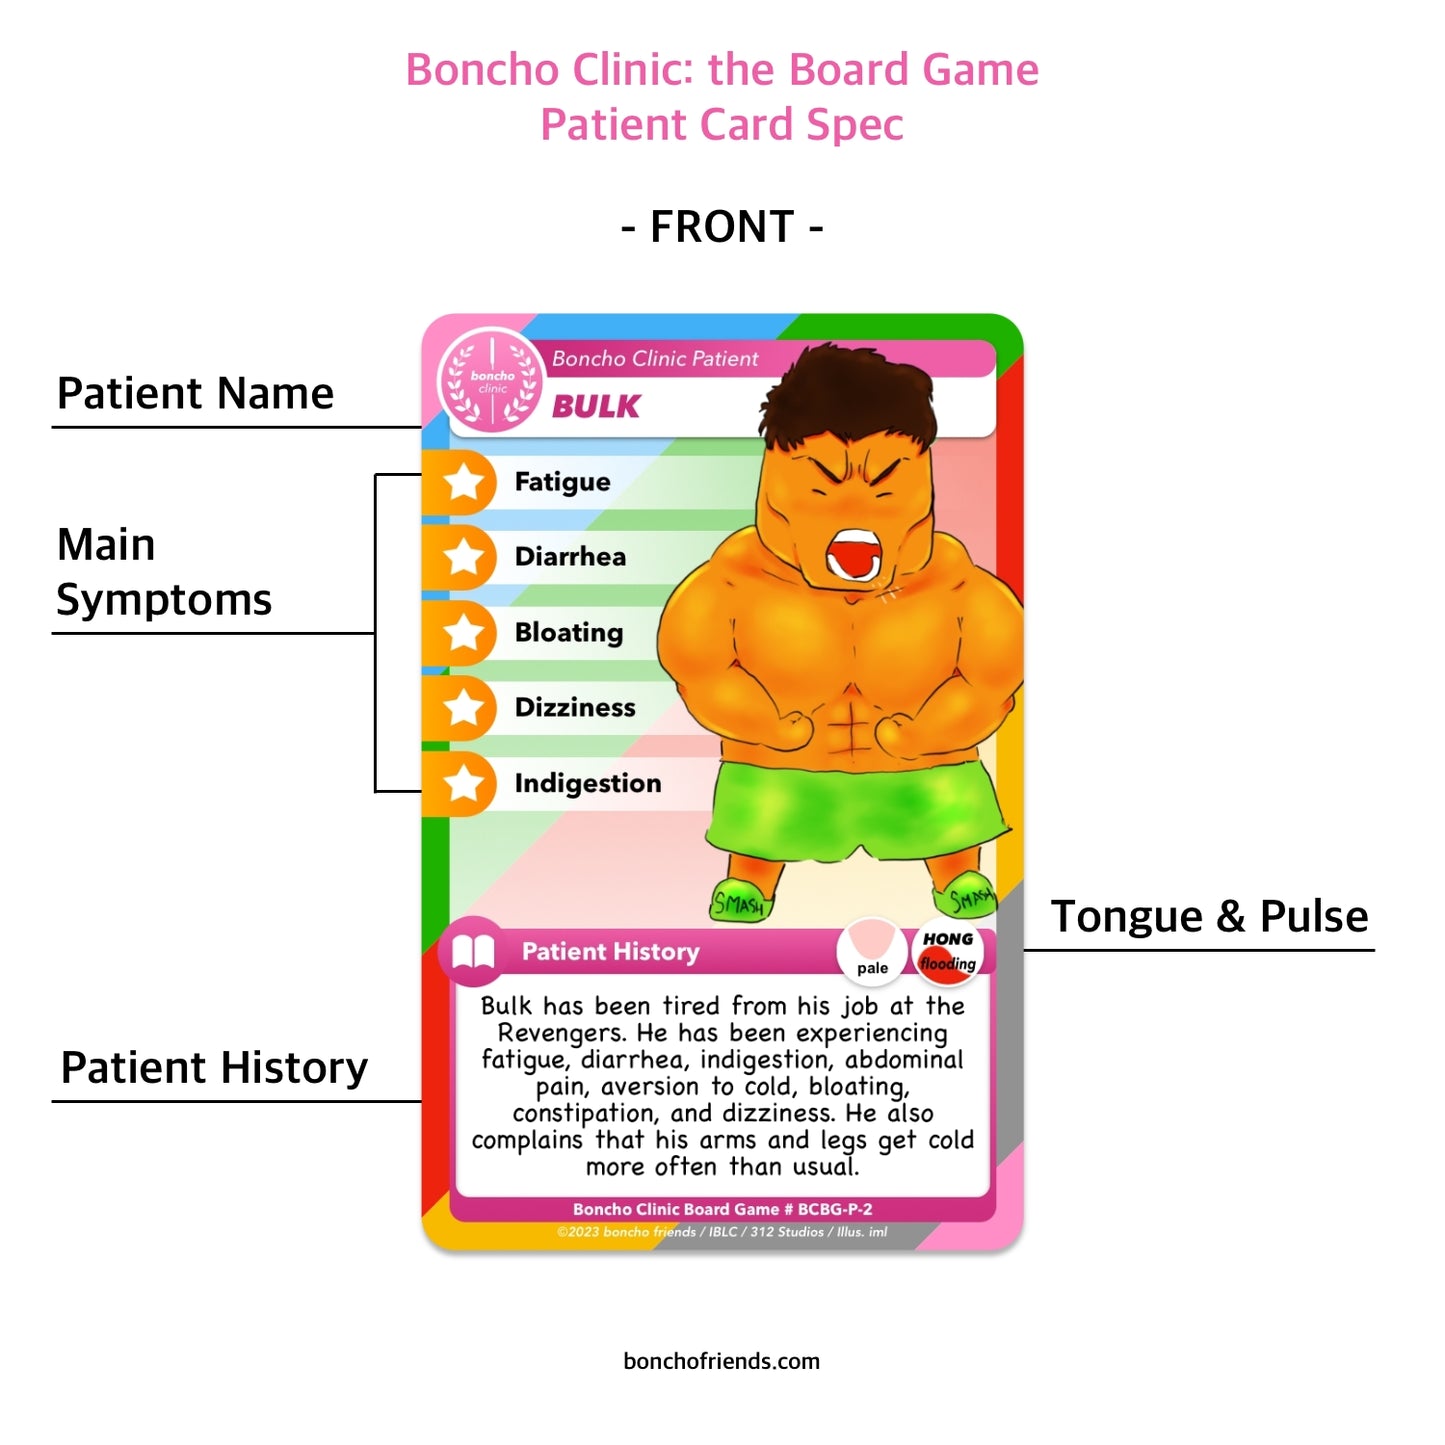 The Game Bundle Set - Oheng! & BCBG